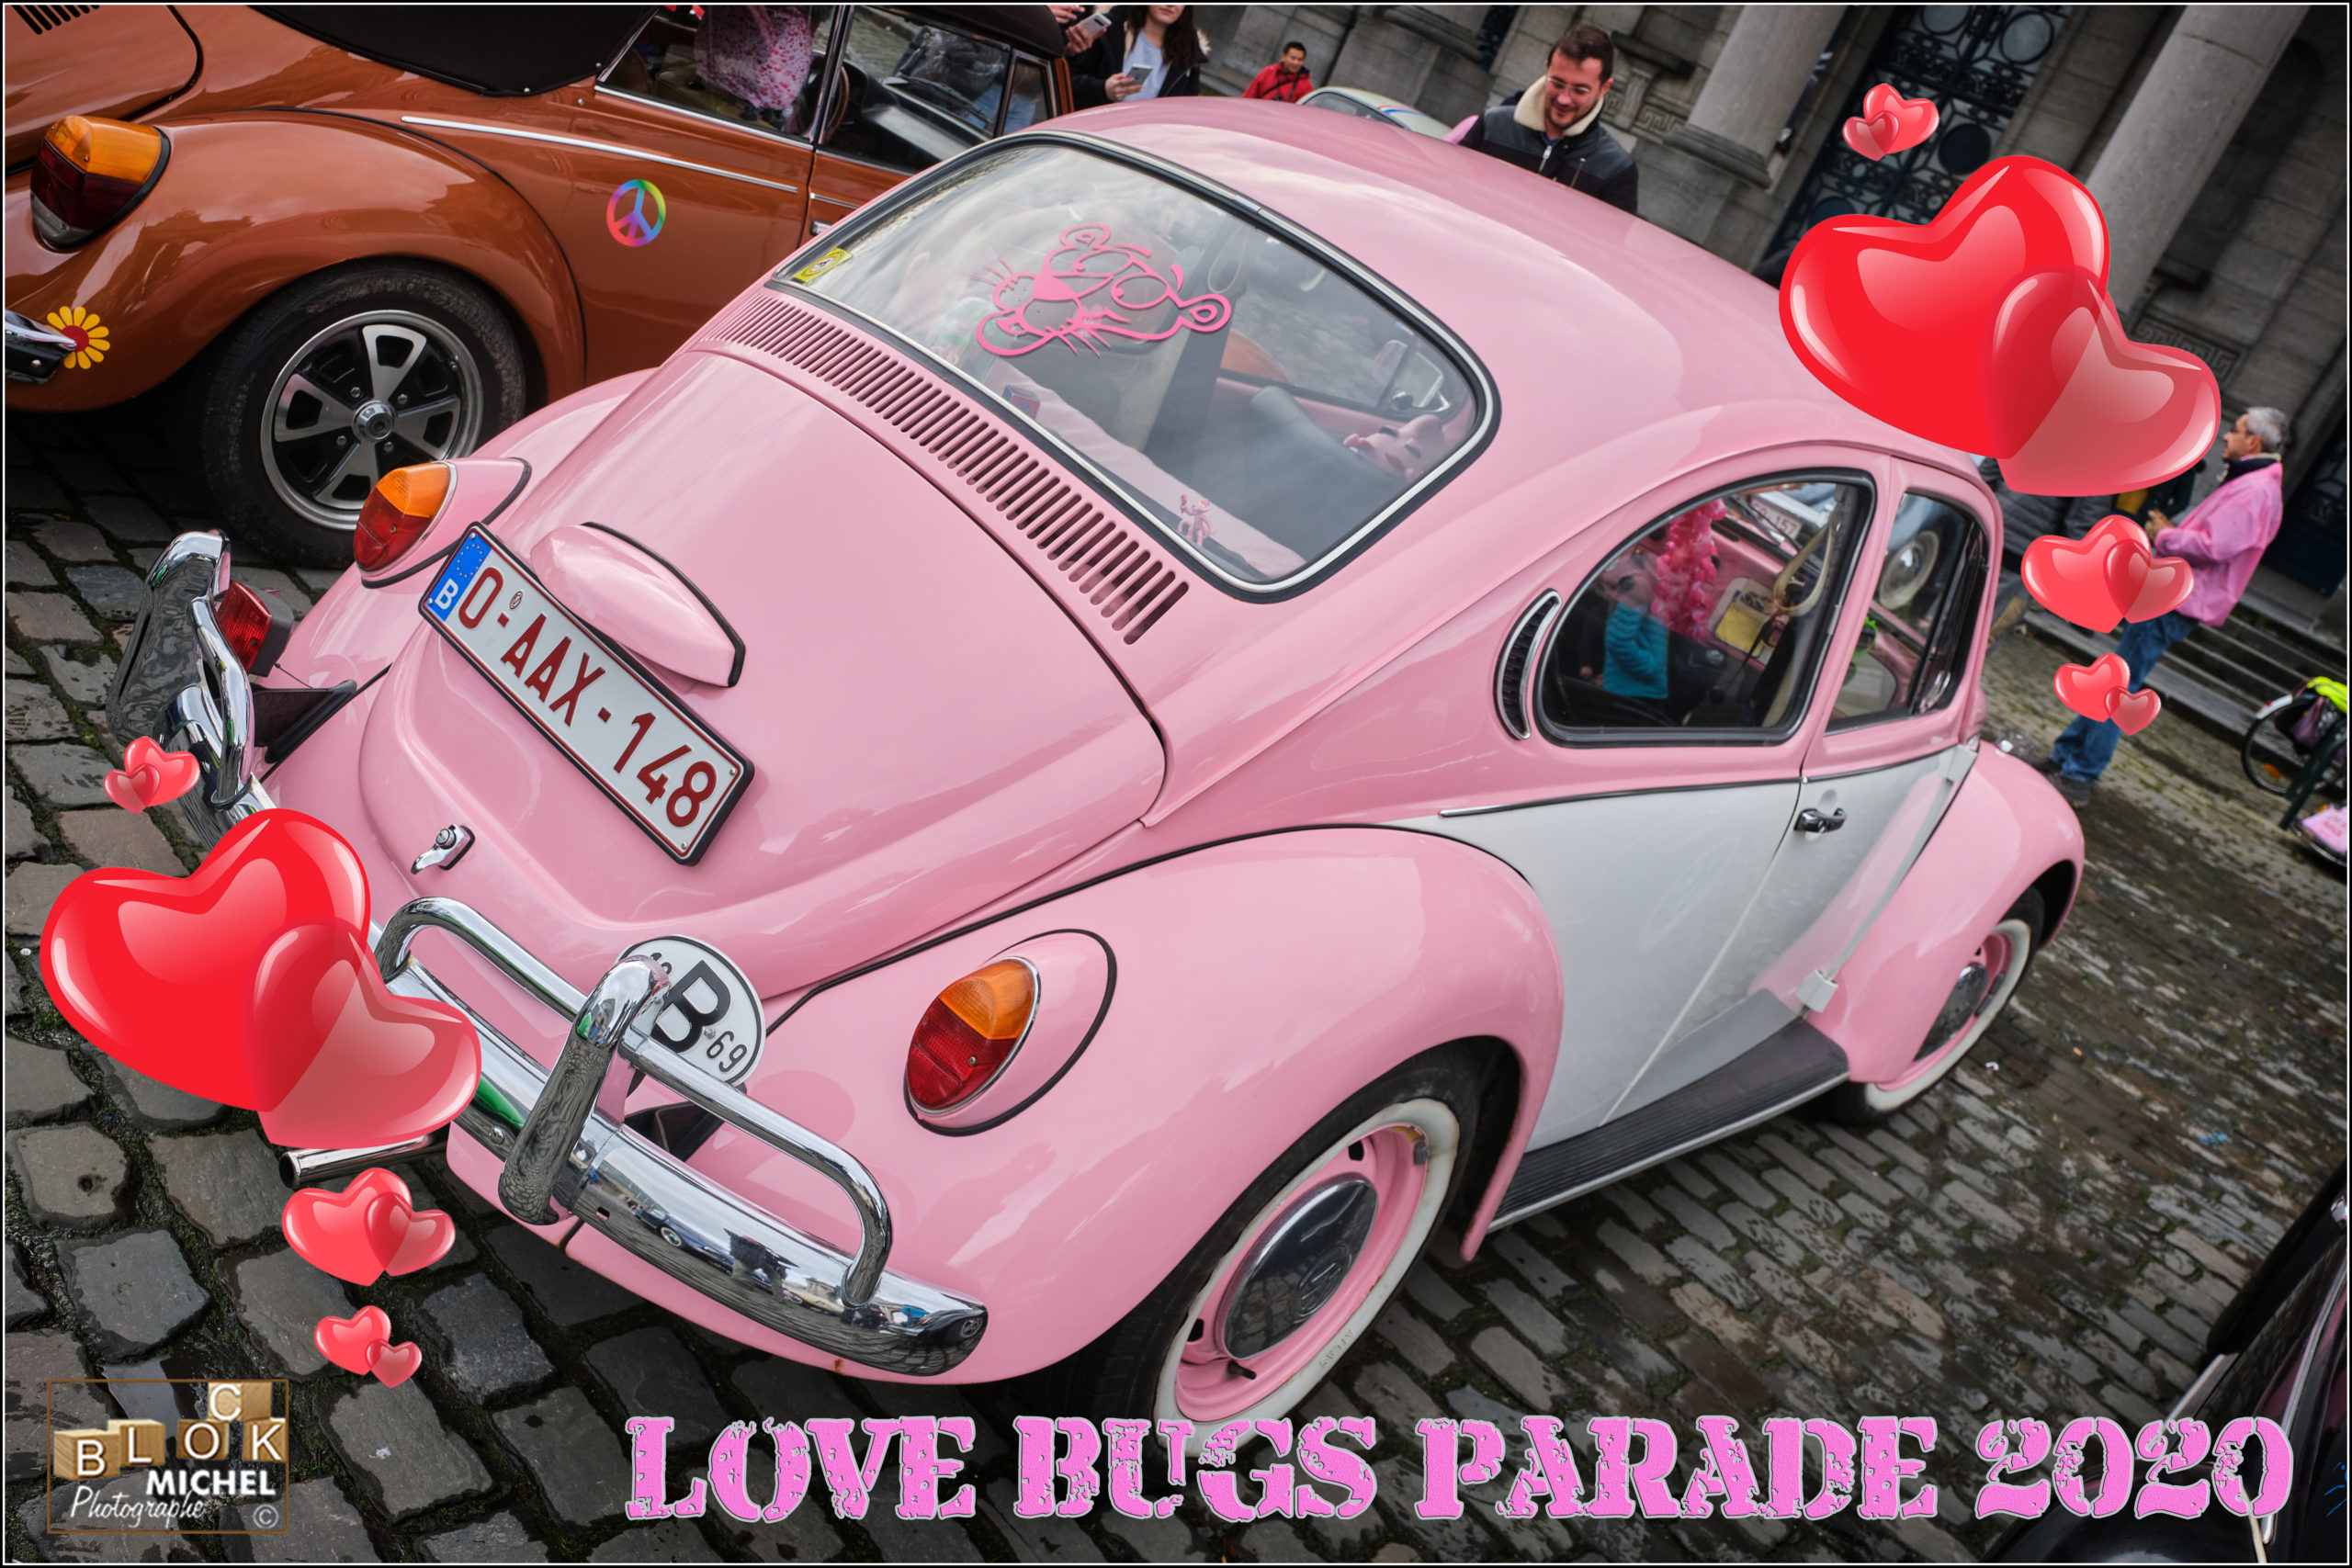 Love Bugs Parade 2020 @ Autoworld